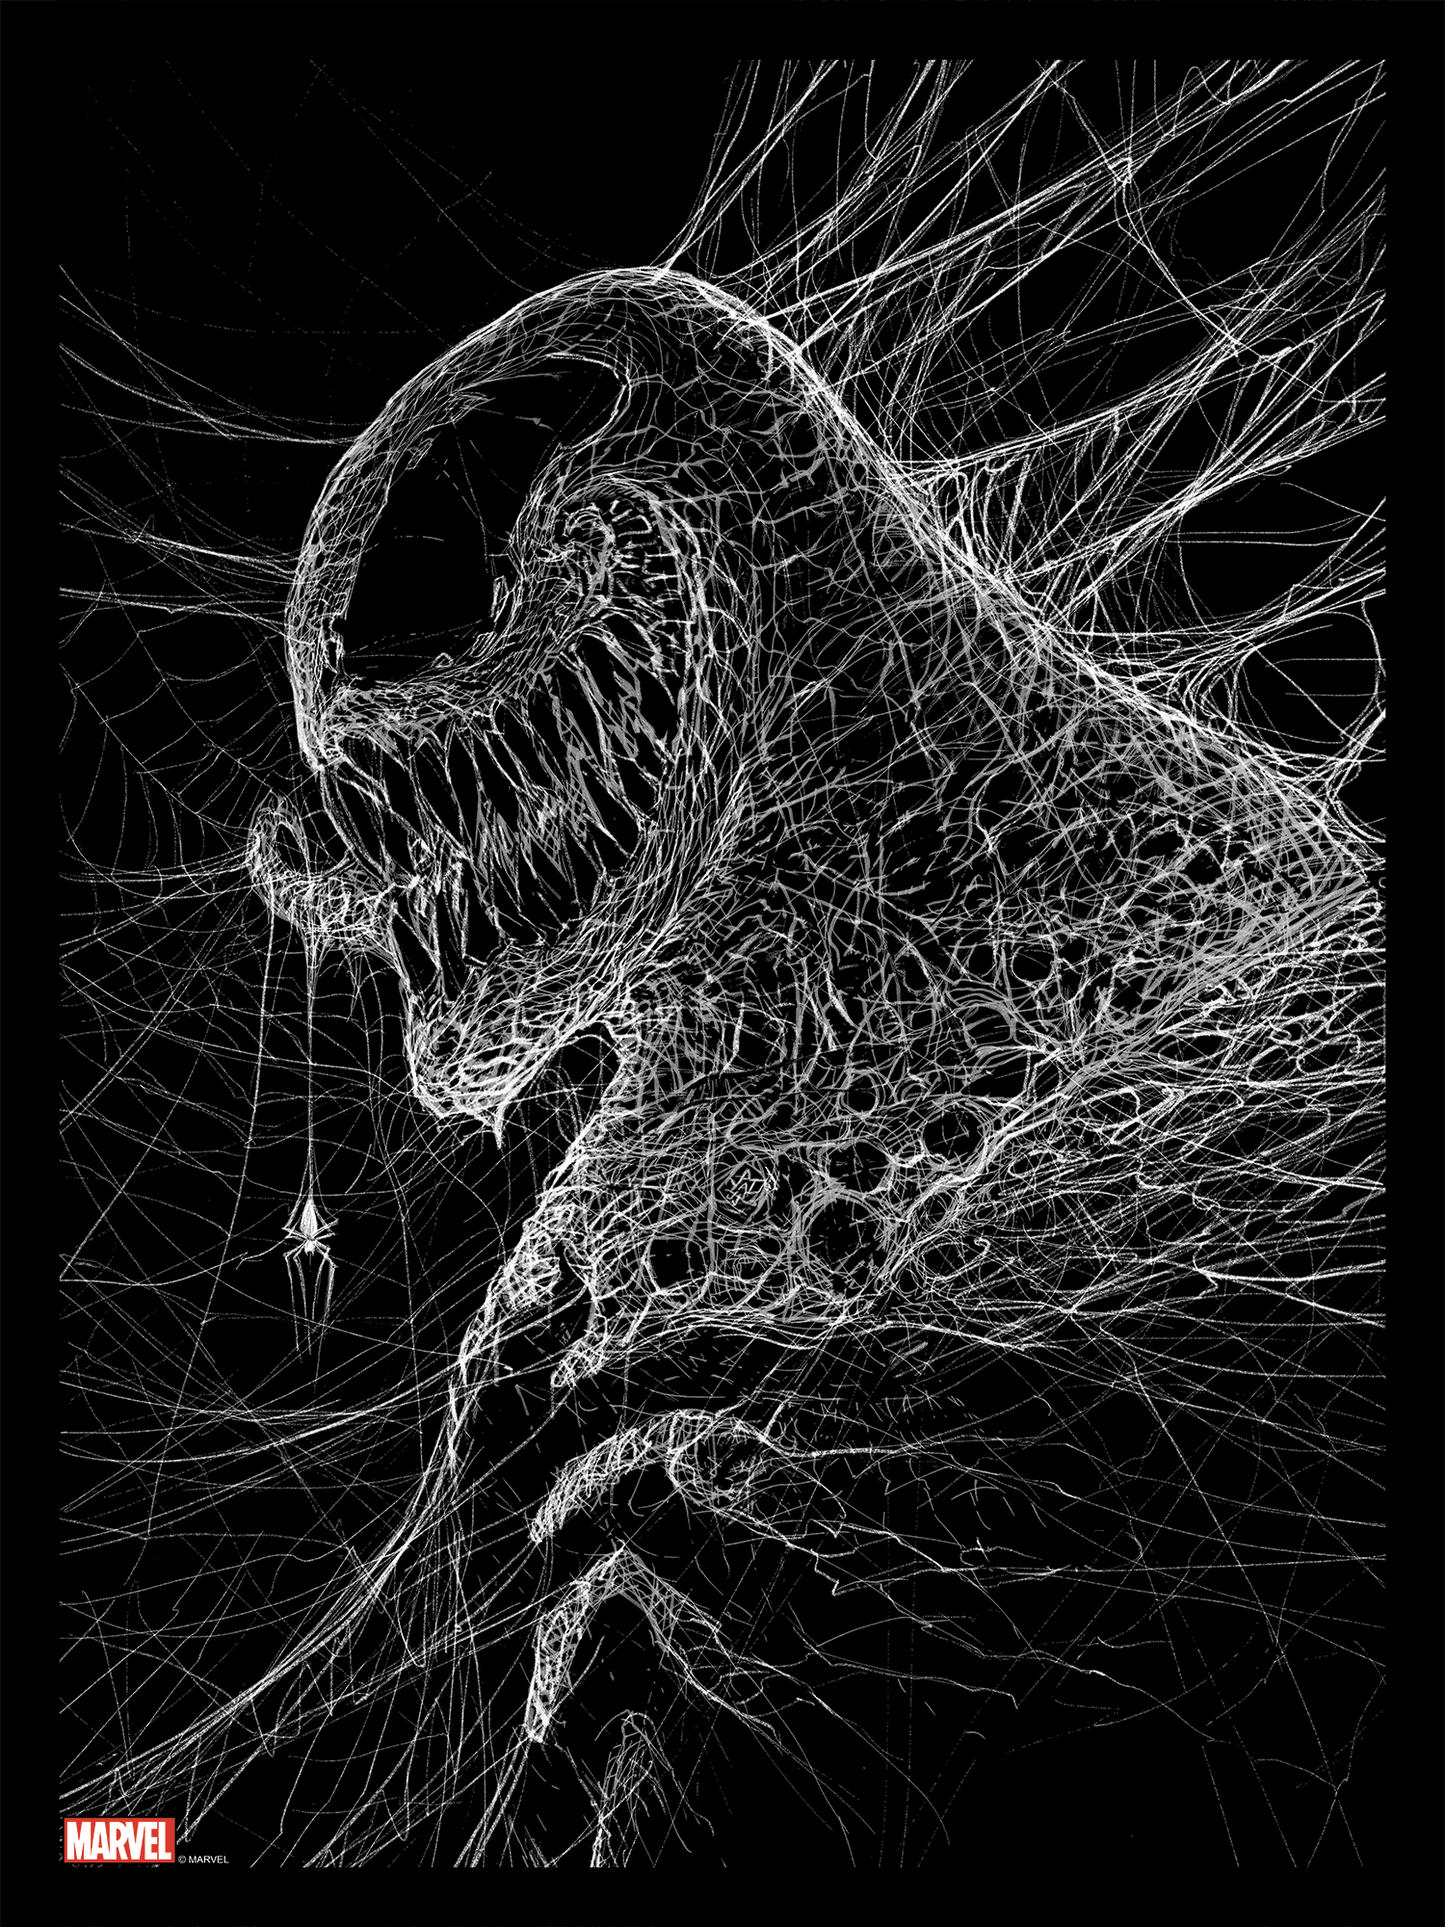 Patrick Gleason "Venom"